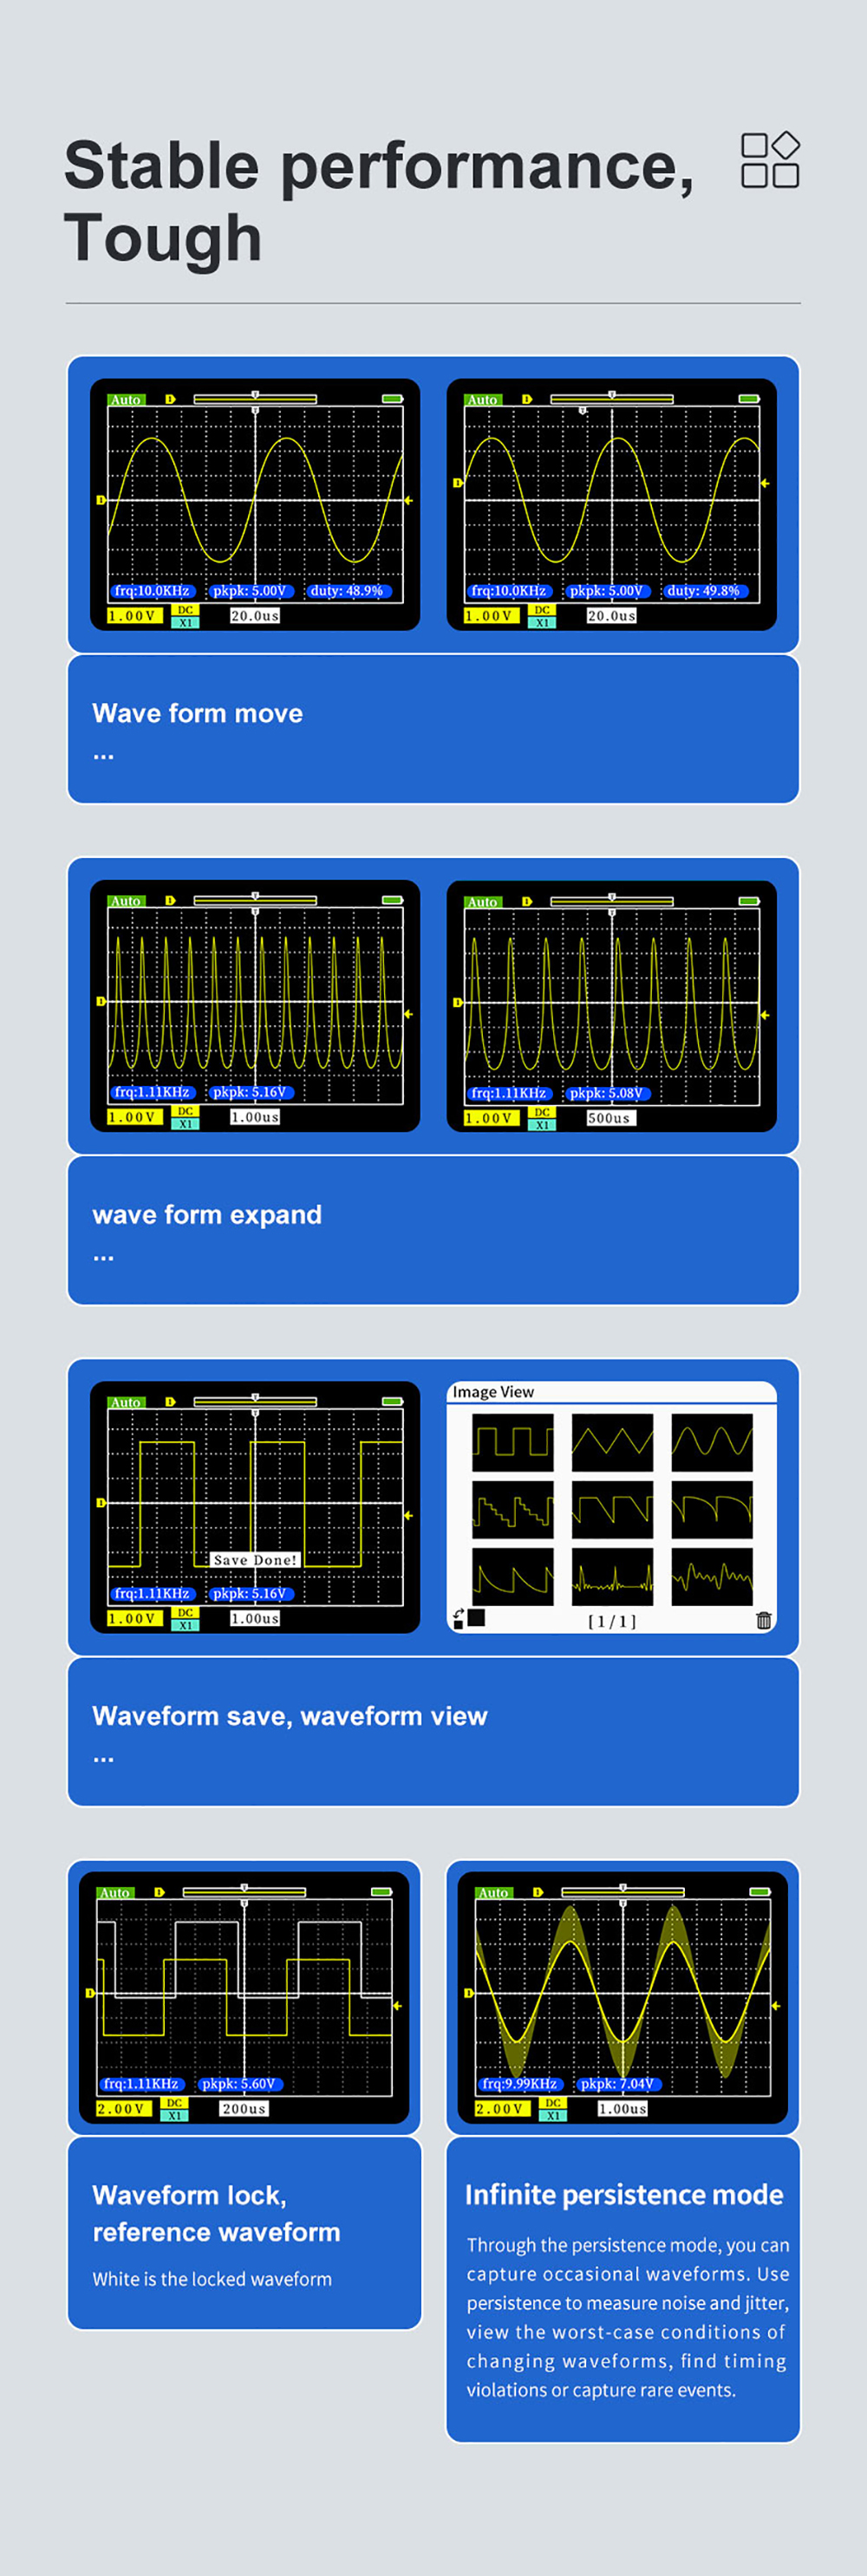 FNIRSI-1C15-Professional-Digital-Oscilloscope-500MSs-Sampling-Rate-110MHz-Analog-Bandwidth-Support-W-1757564-7